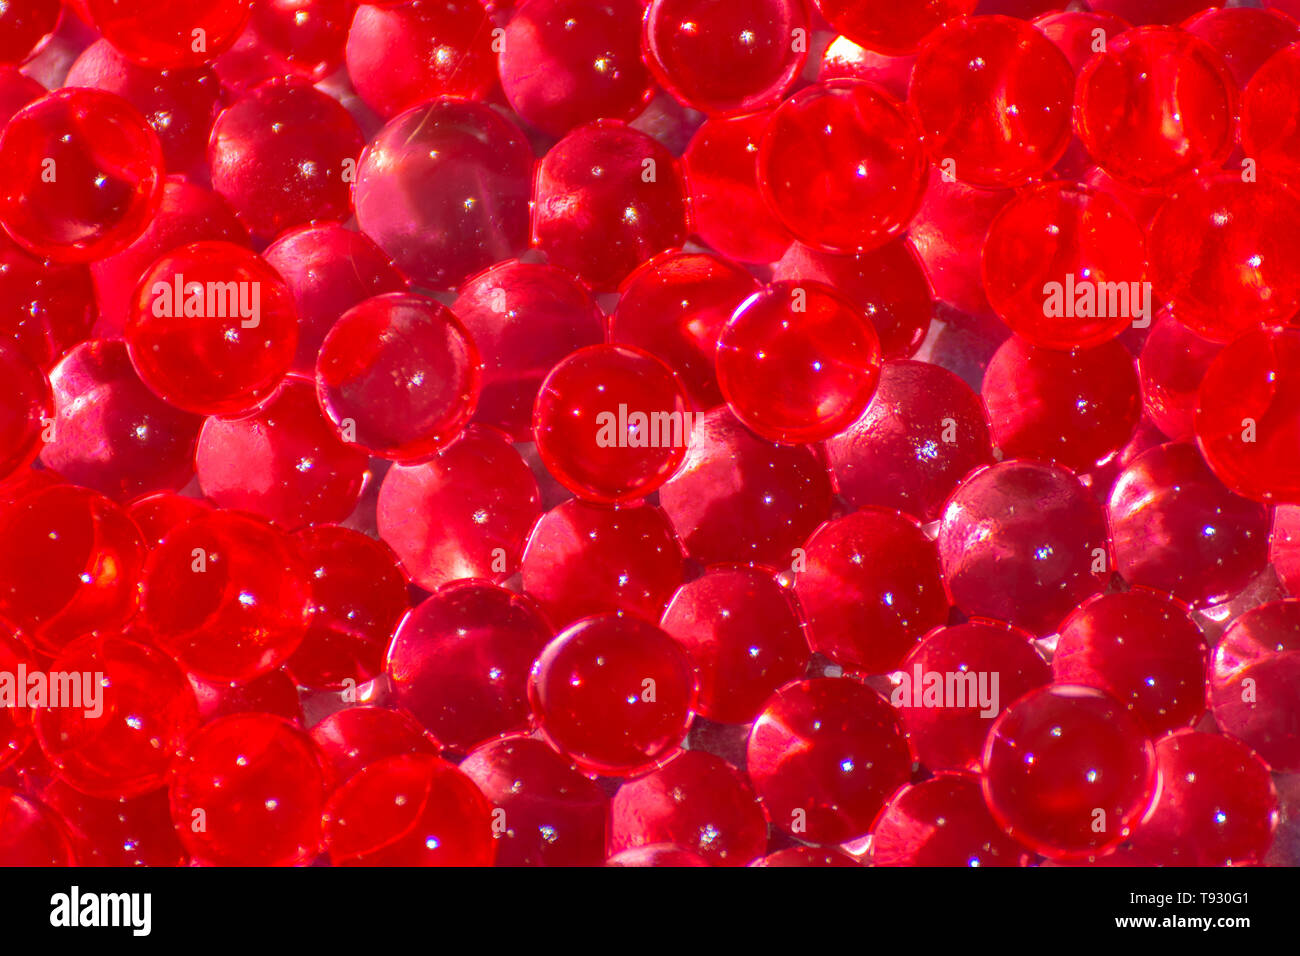 Transparent rot Hydrogel Kugeln. Red Water gel Kugeln mit Bokeh. Polymer  gel Silica Gel. Liquid Crystal Ball mit Reflexion. Rote Kugeln Textur  backgro Stockfotografie - Alamy